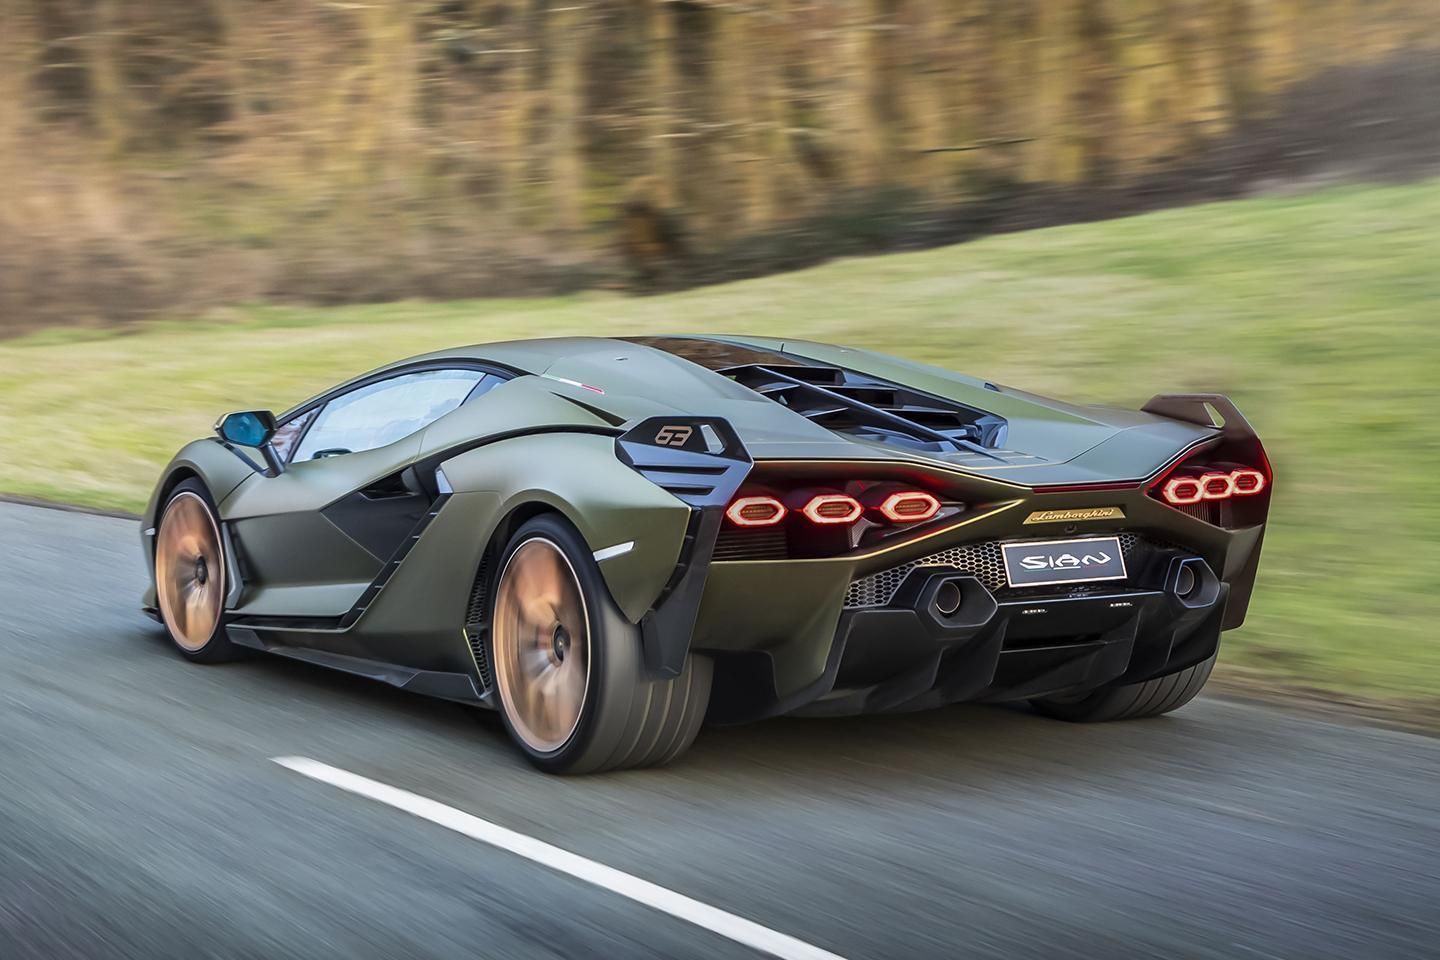 Lamborghini Sian FKP 37 2021 review – a supercar with a supercapacitor